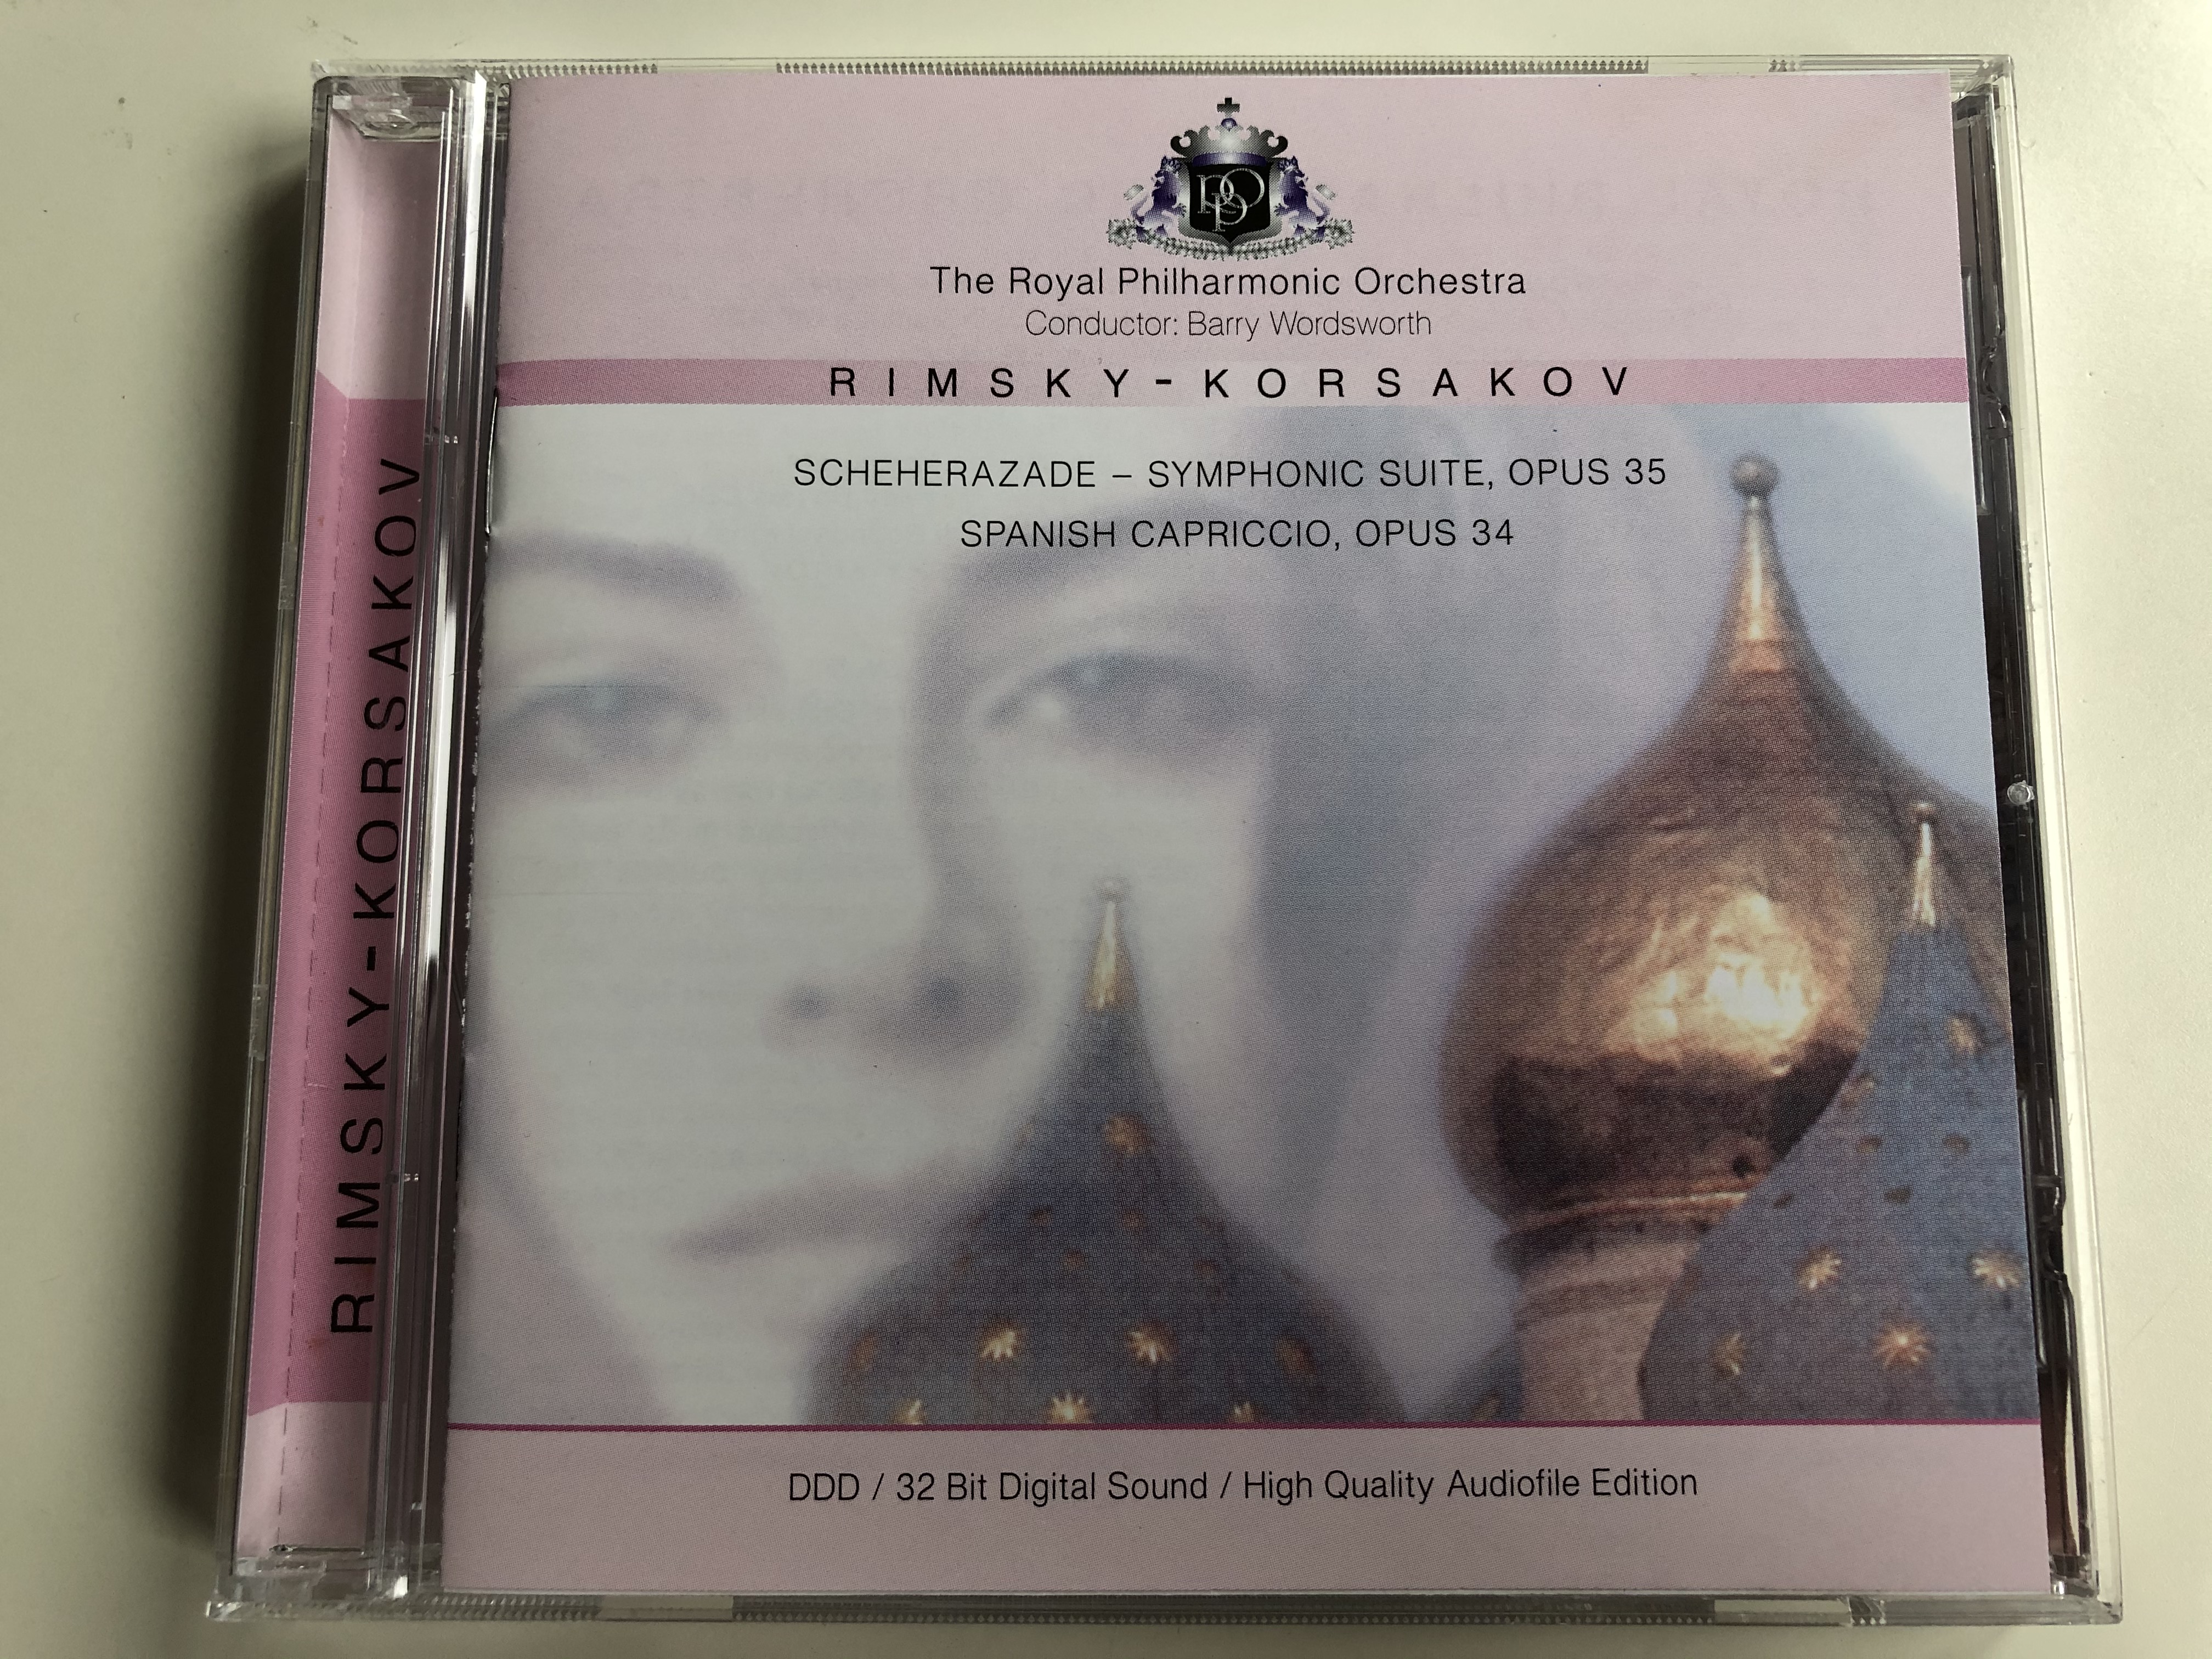 rimsky-korsakov-scheherezade-symphonic-suite-opus-35-spanish-capriccio-opus-34-royal-philharmonic-orchestra-conductor-barry-woodsworth-centurion-music-audio-cd-1993-204403-201-1-.jpg